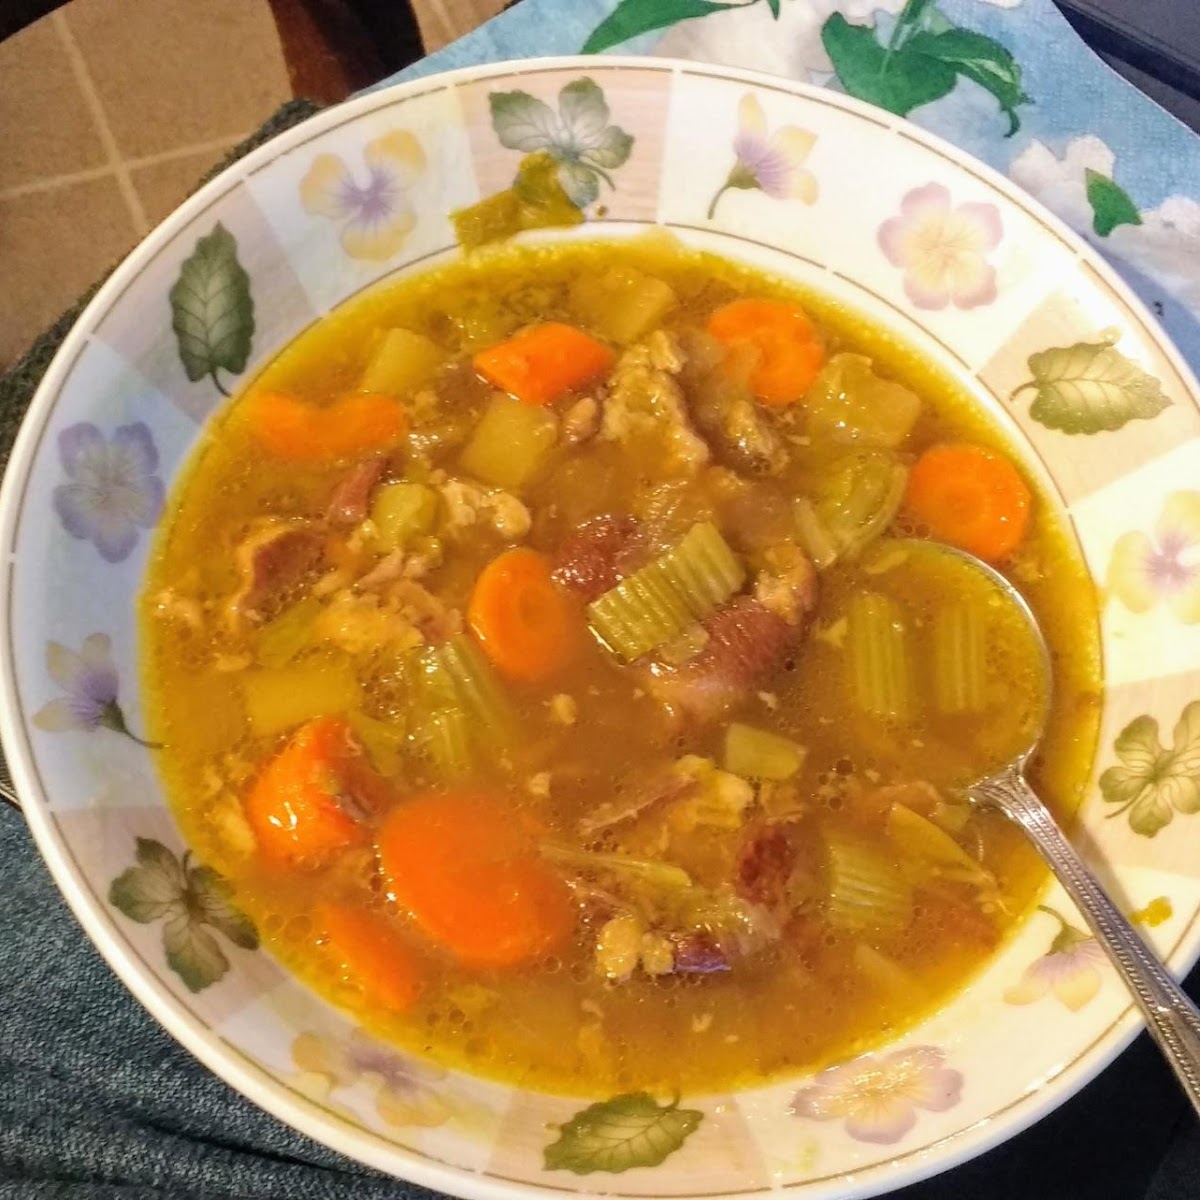 Crock Pot Express Split Pea Soup · The Typical Mom